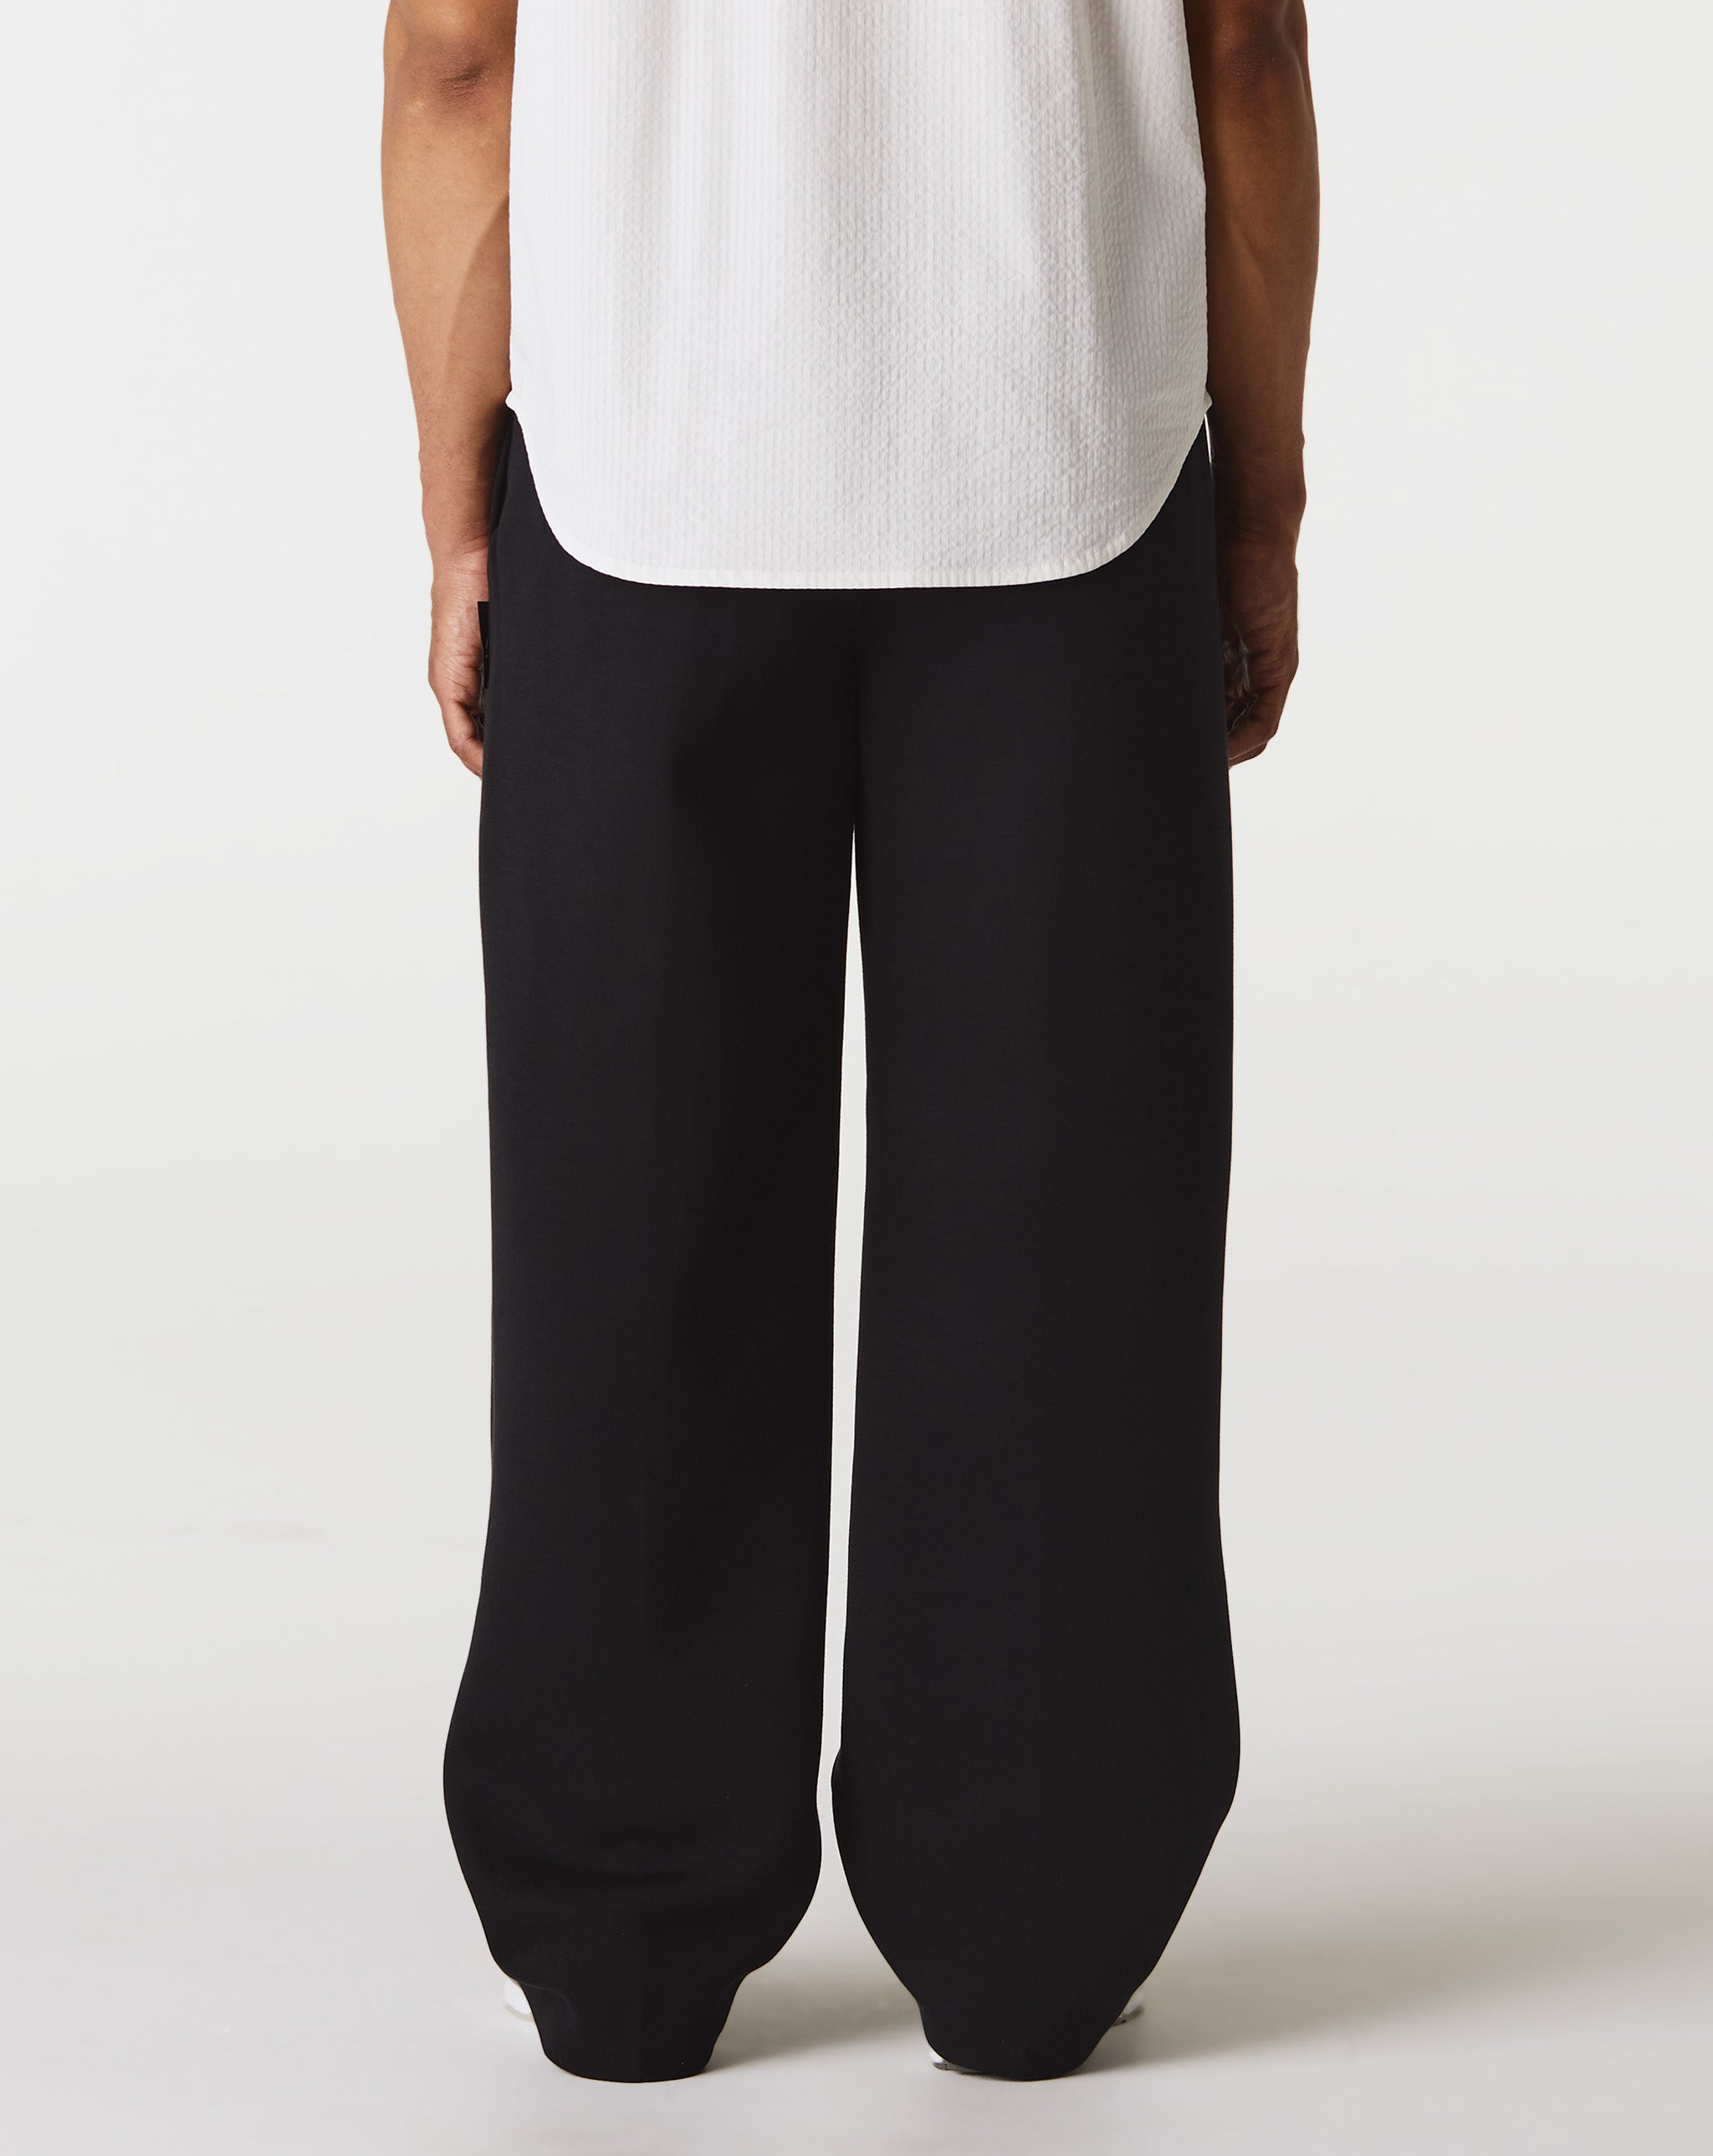 Nike Tech Fleece Tailored Pants  - Cheap Cerbe Jordan outlet